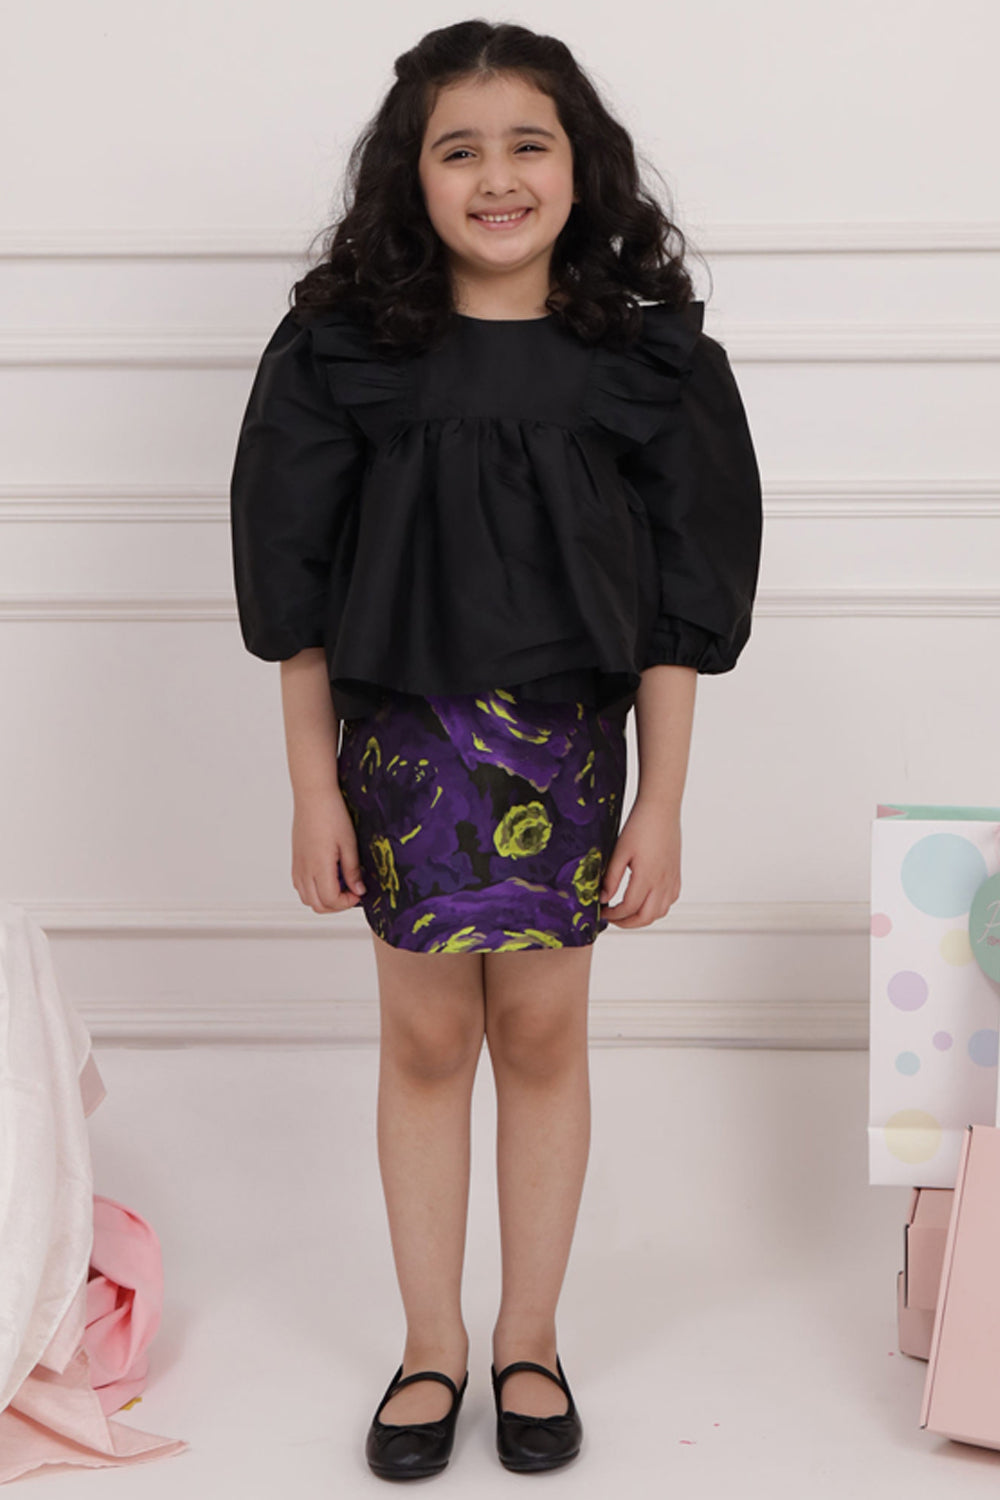 Black Ruffle Top with Short Purple Skirt